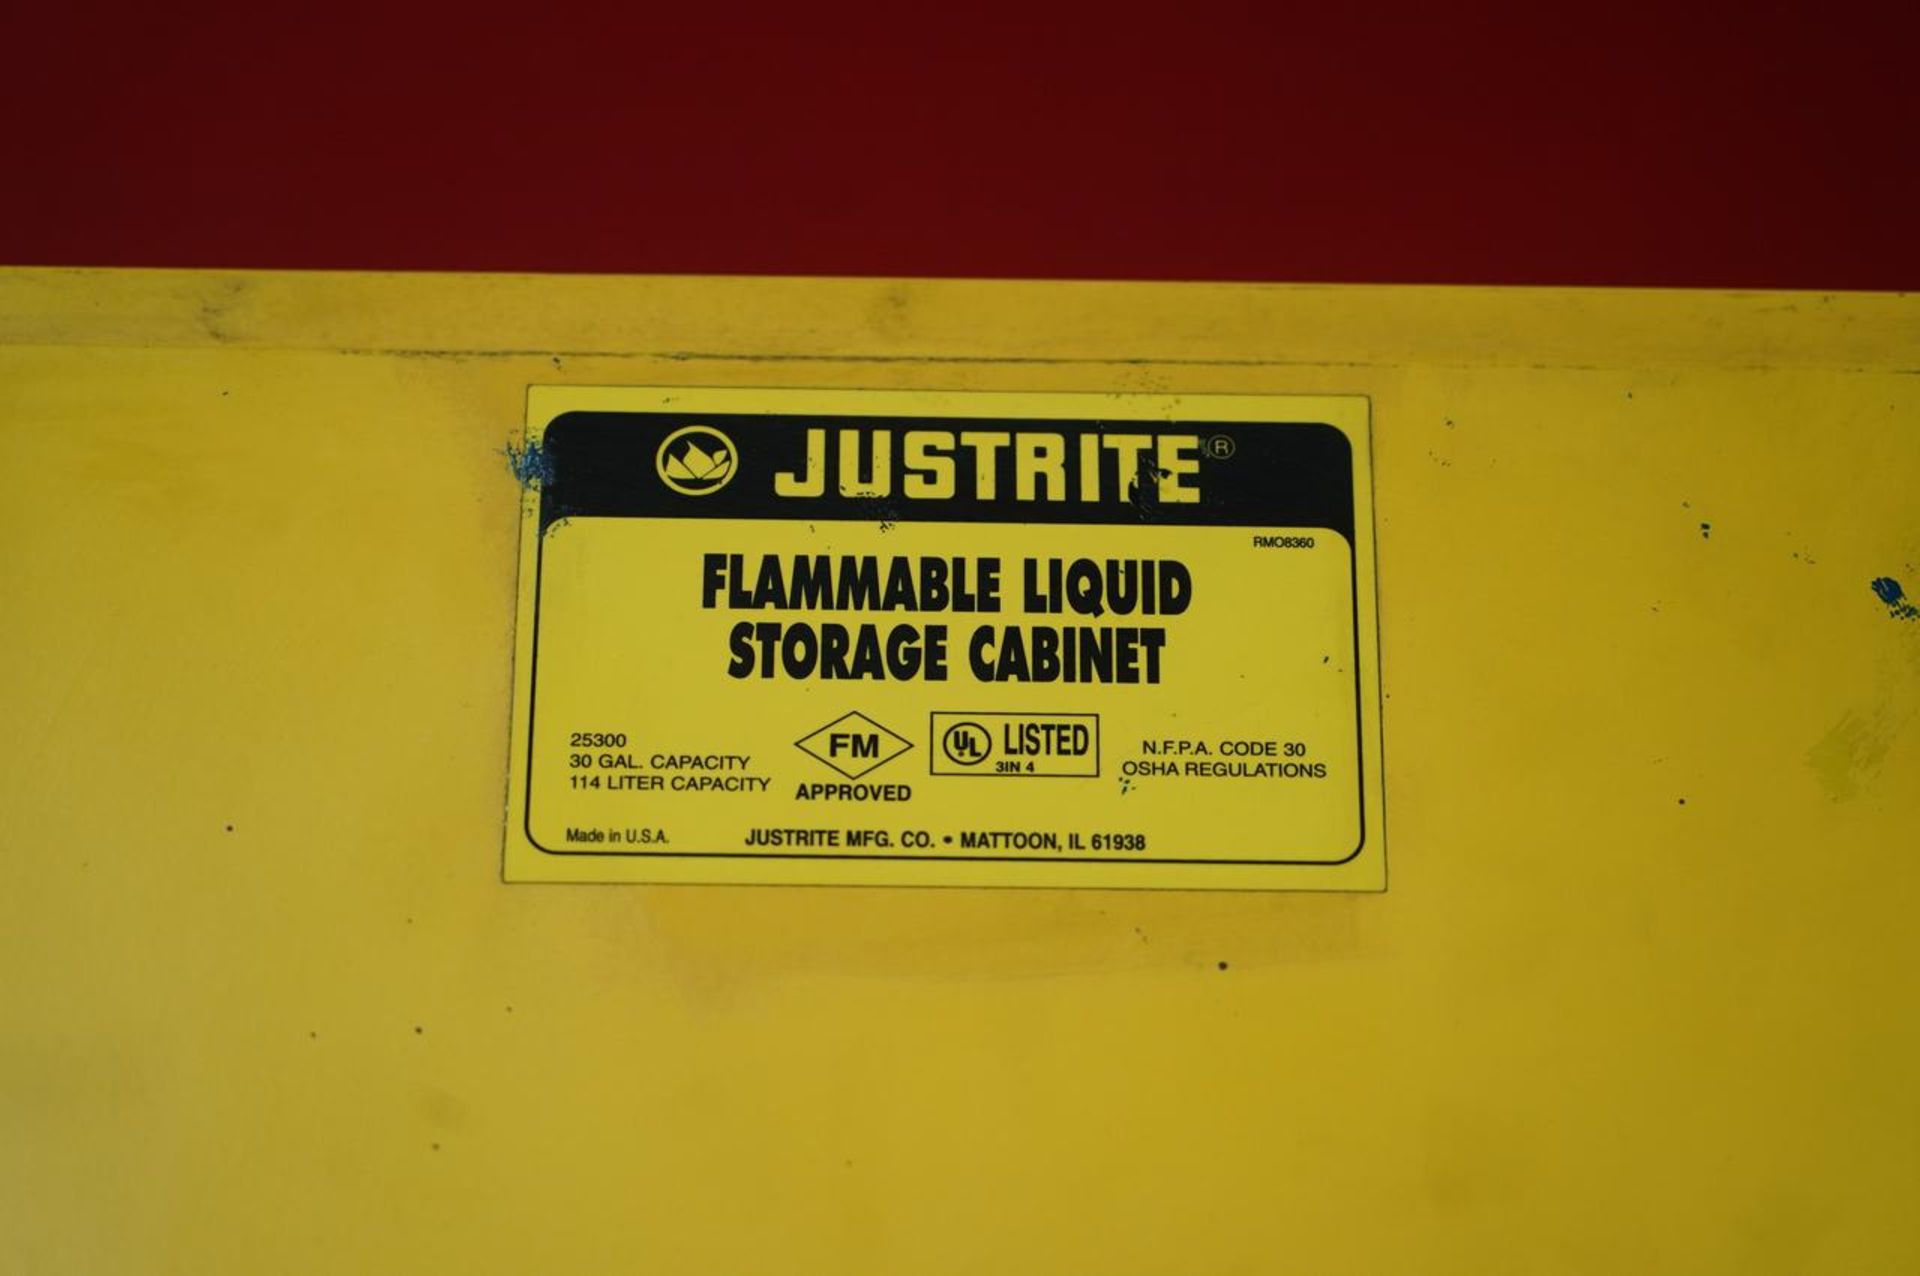 Justrite RMO8360 30 Gallon Safety Storage Cabinet - Image 2 of 2